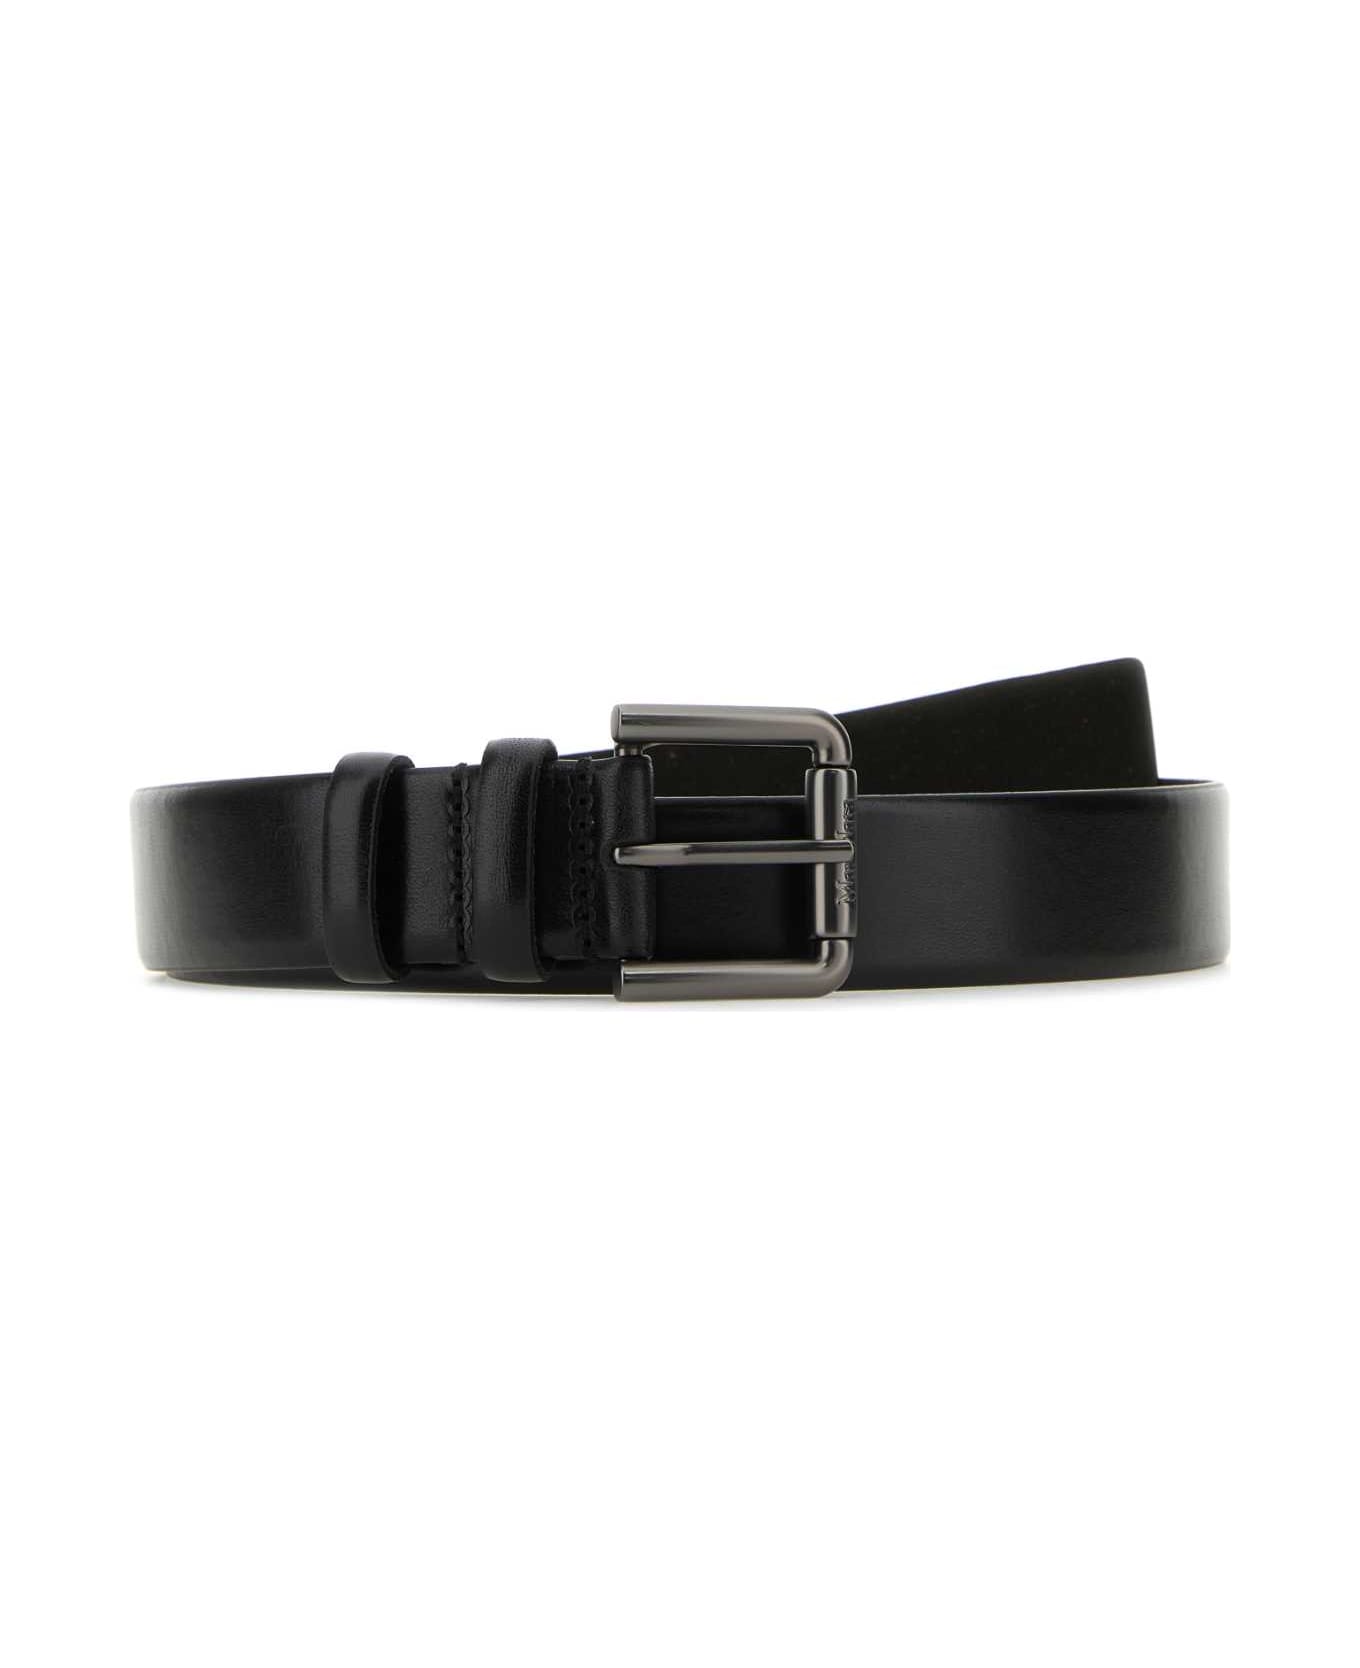 Max Mara Black Leather Belt - NERO ベルト